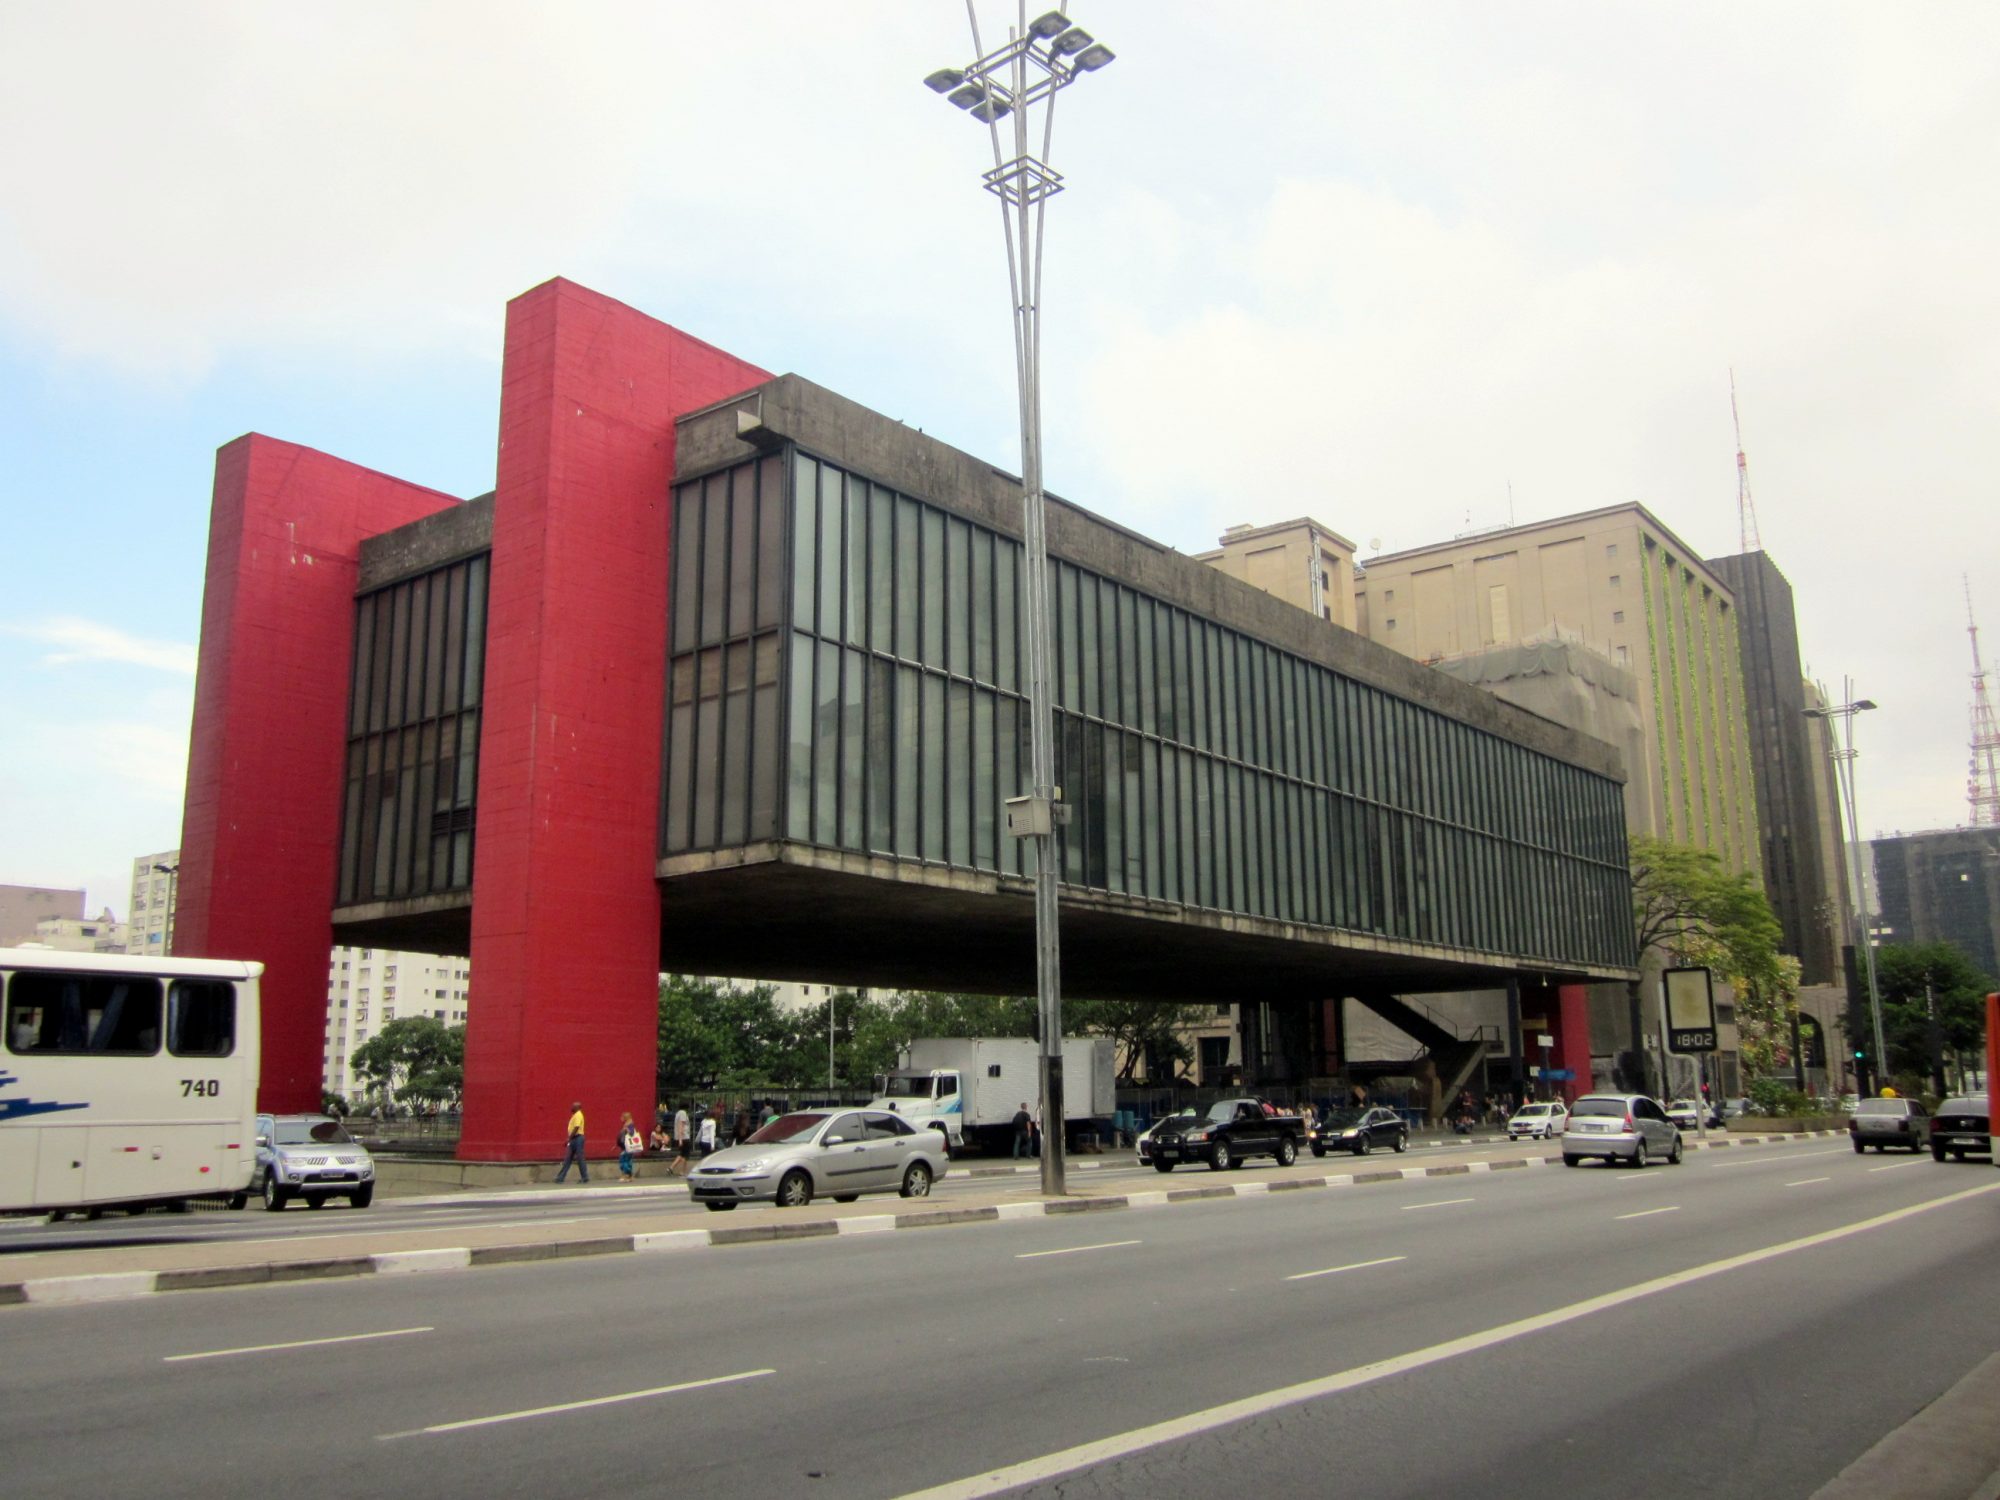 Brazil, São Paulo,MASP museum is perhaps the best known museum in São Paulo,